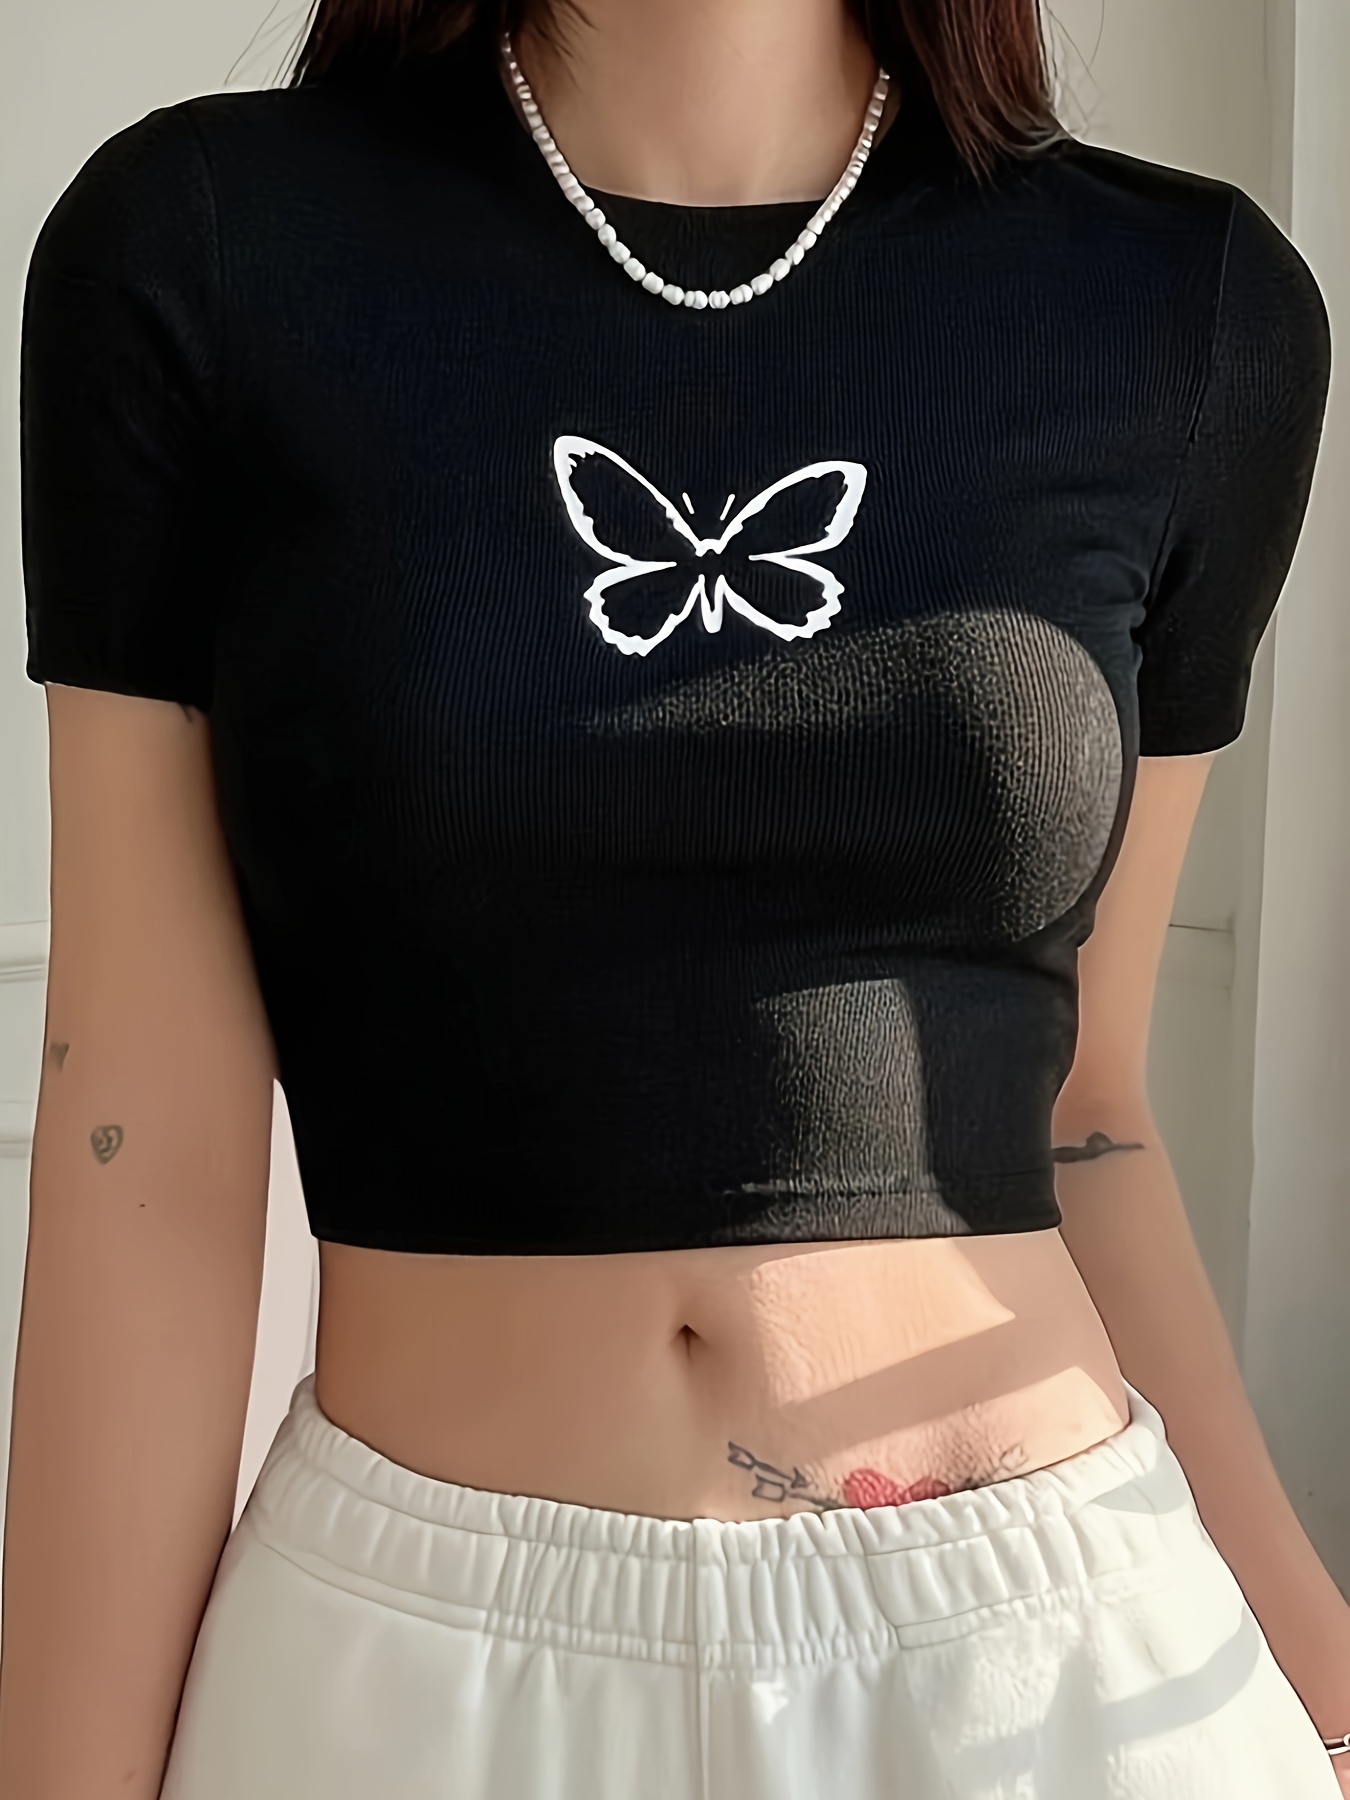 DISNIMO Cute Crop Tops for Women Teen Girls Trendy Short Sleeve